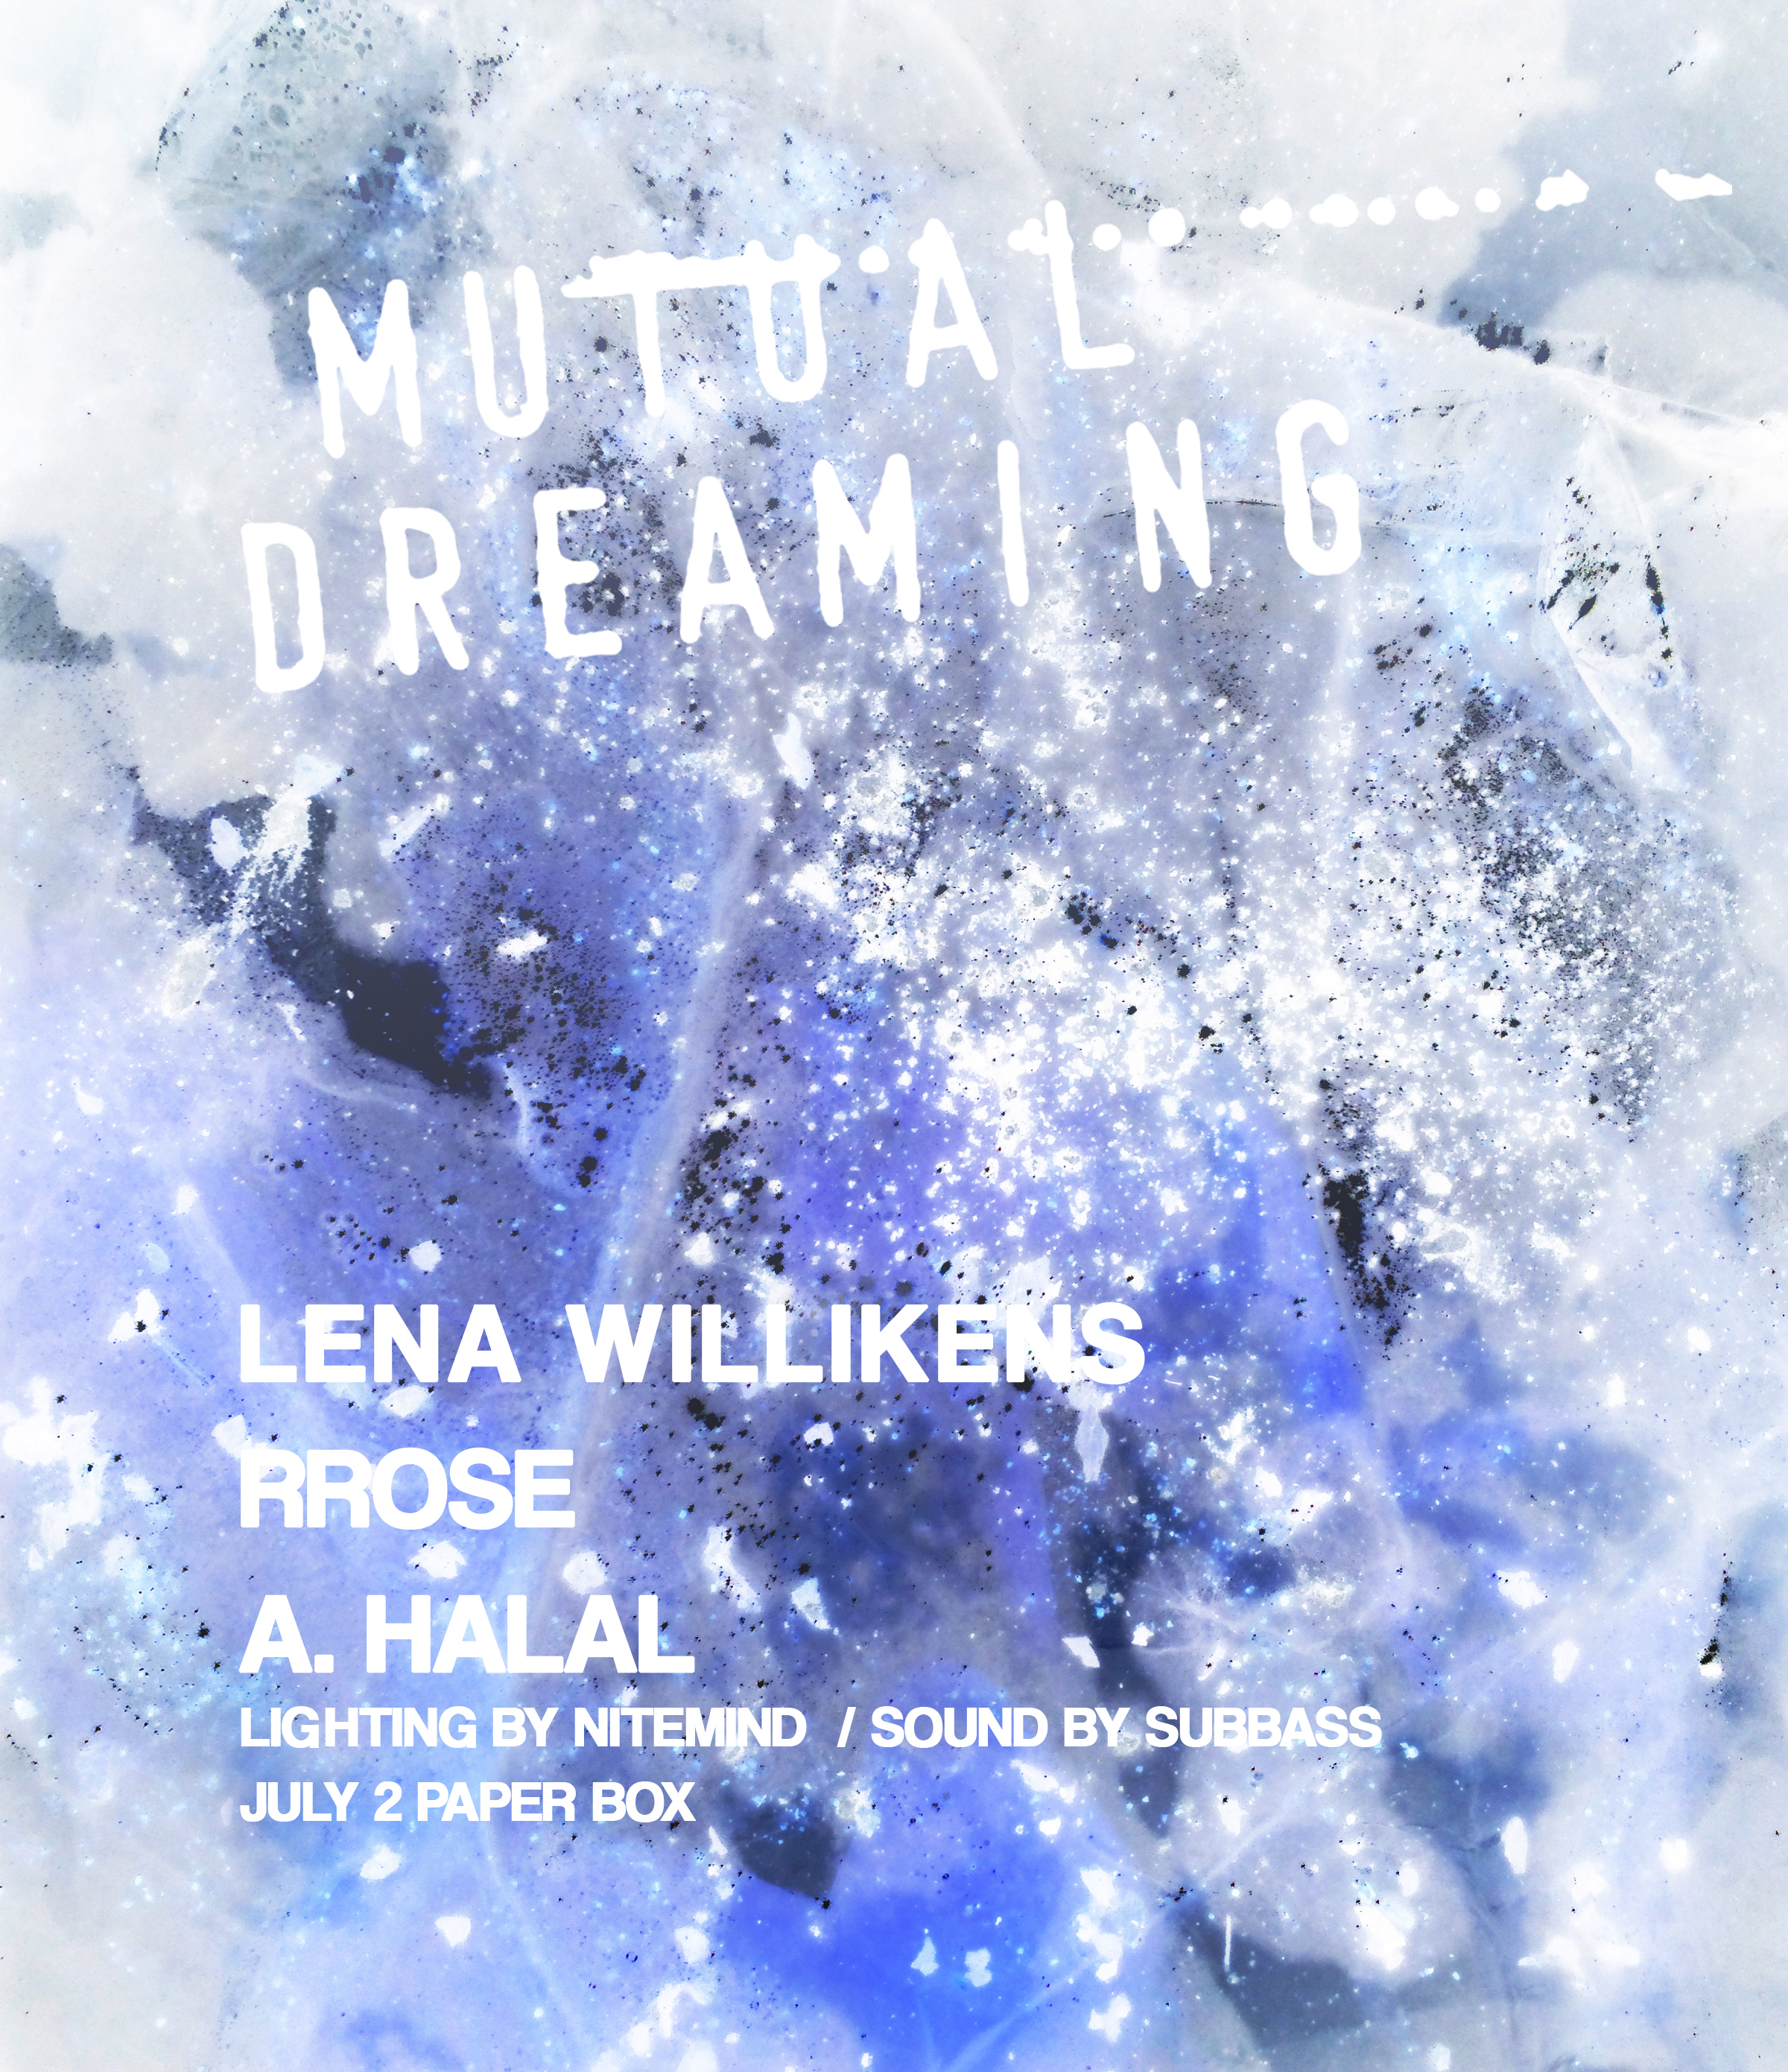    Mutual Dreaming: Rrose, Lena Willikens, A. Halal   July 2016 